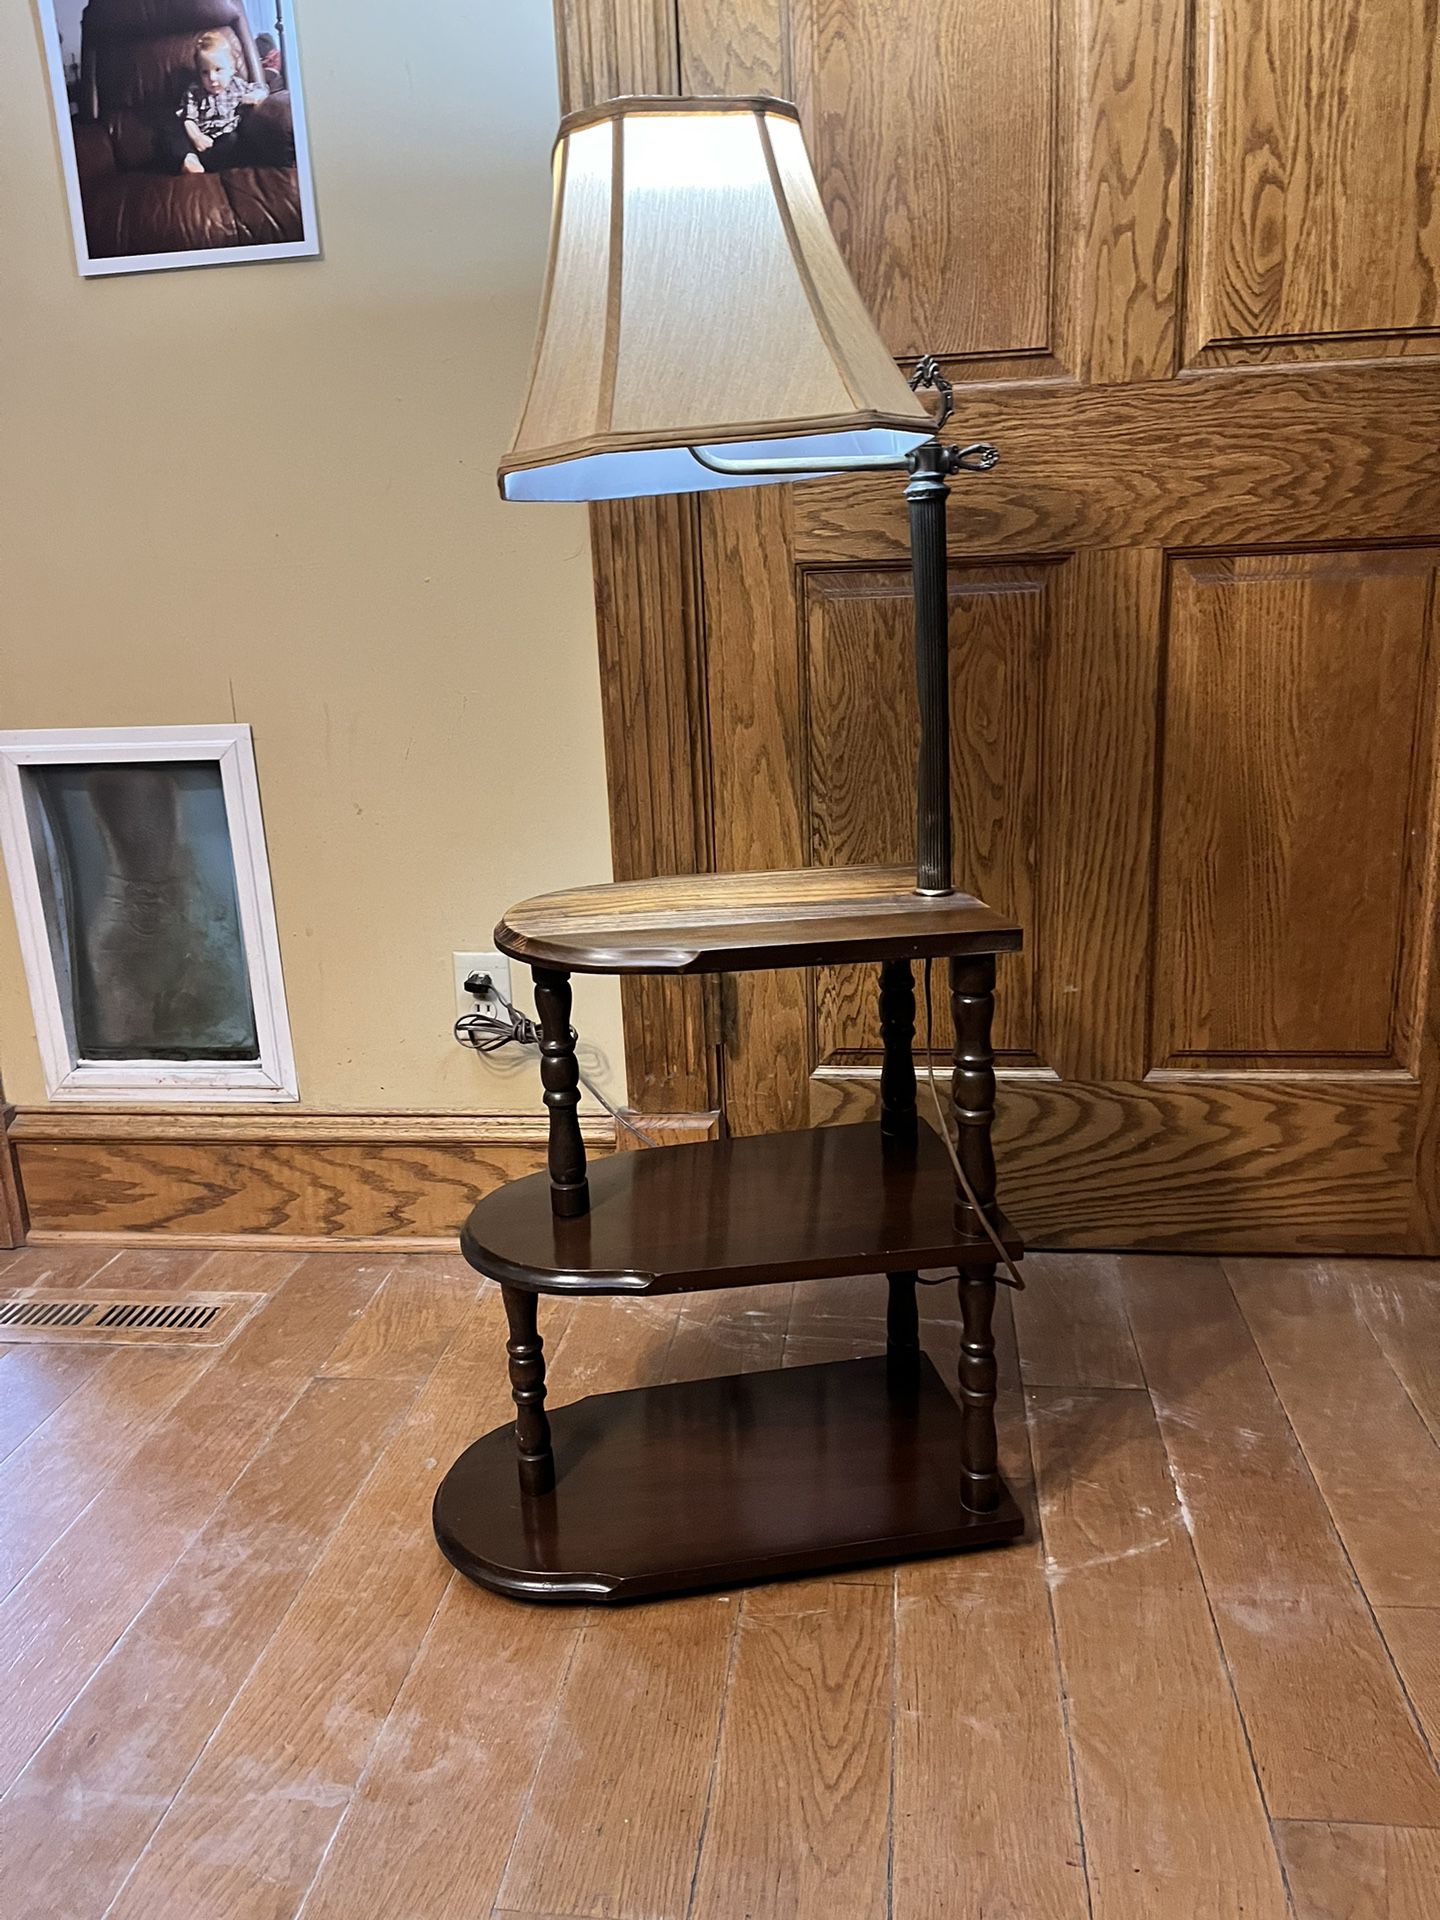 Vintage Shelf End Table LAMP